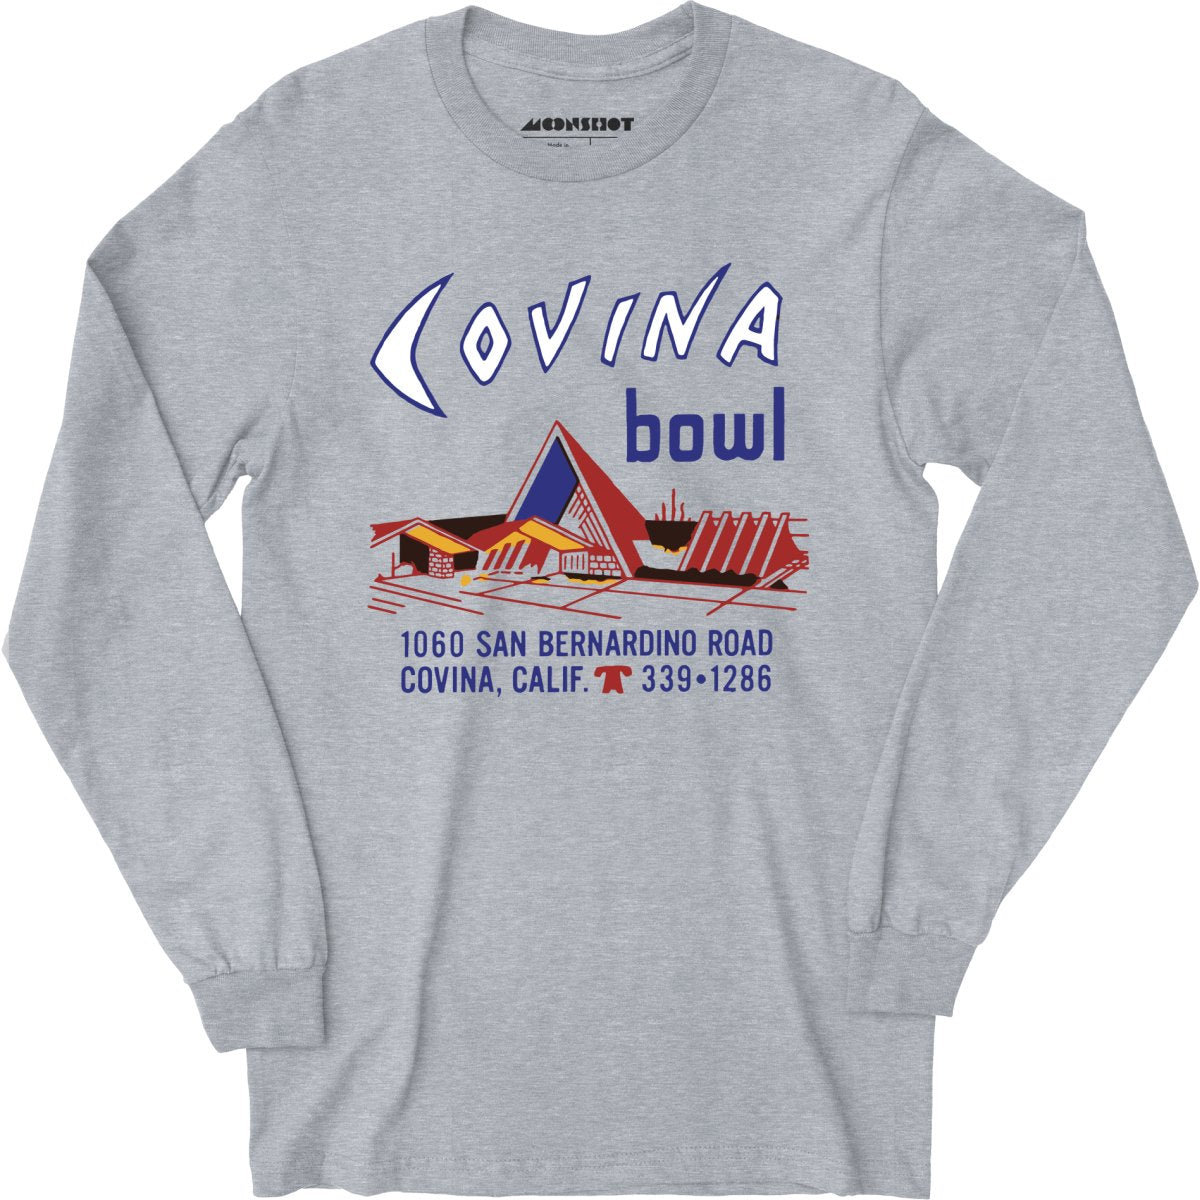 Covina Bowl - Covina, CA - Vintage Bowling Alley - Long Sleeve T-Shirt